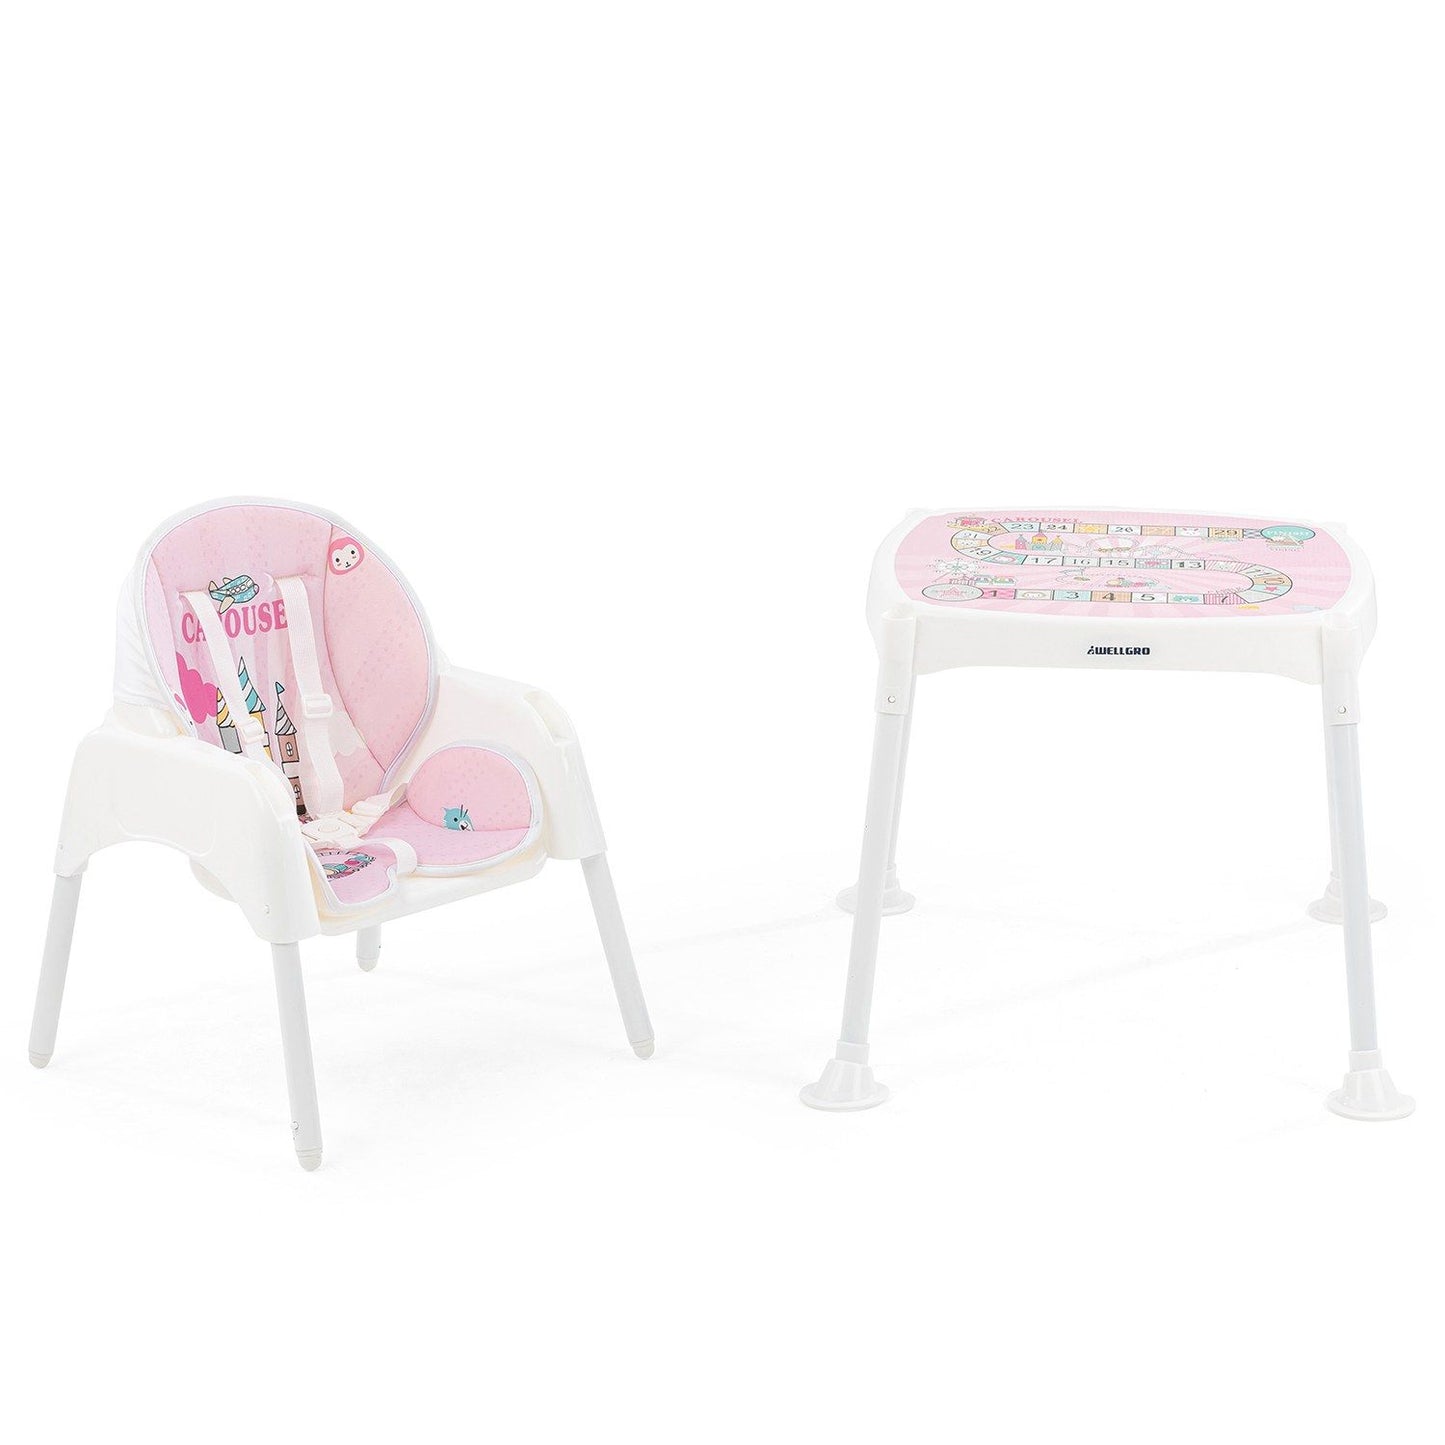 Carousel - Baby's Chair